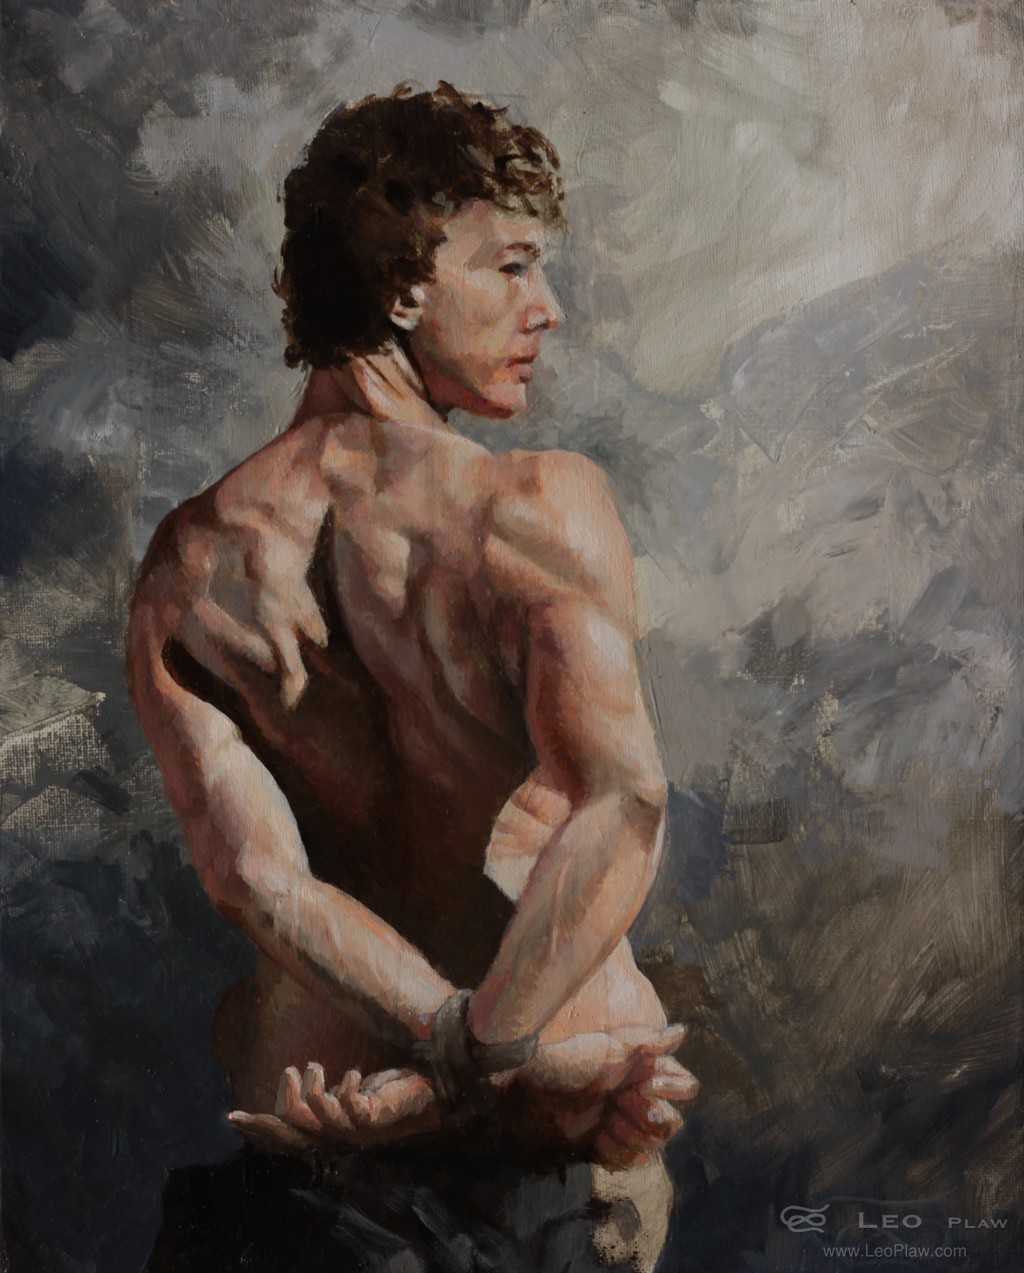 "Captive", Leo Plaw, 24 x 30cm, oil on canvas